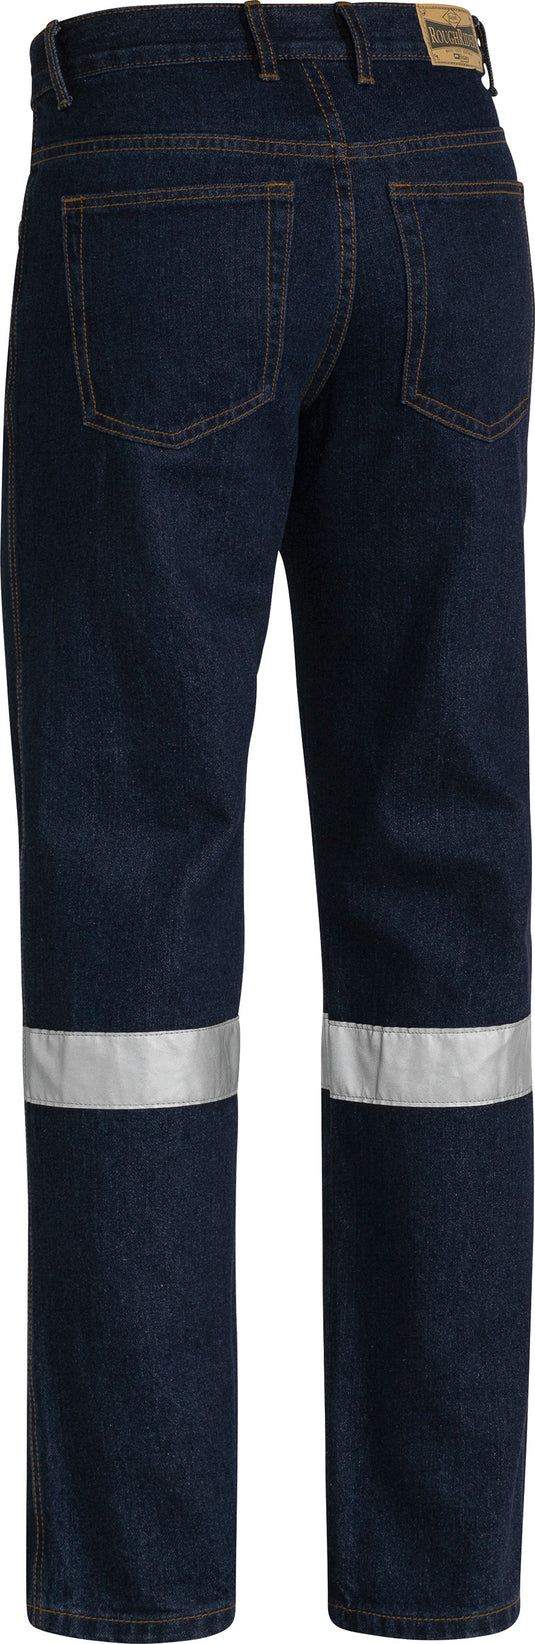 Wholesale BP6050T Bisley 3M Taped Rough Rider Jeans - Regular Printed or Blank